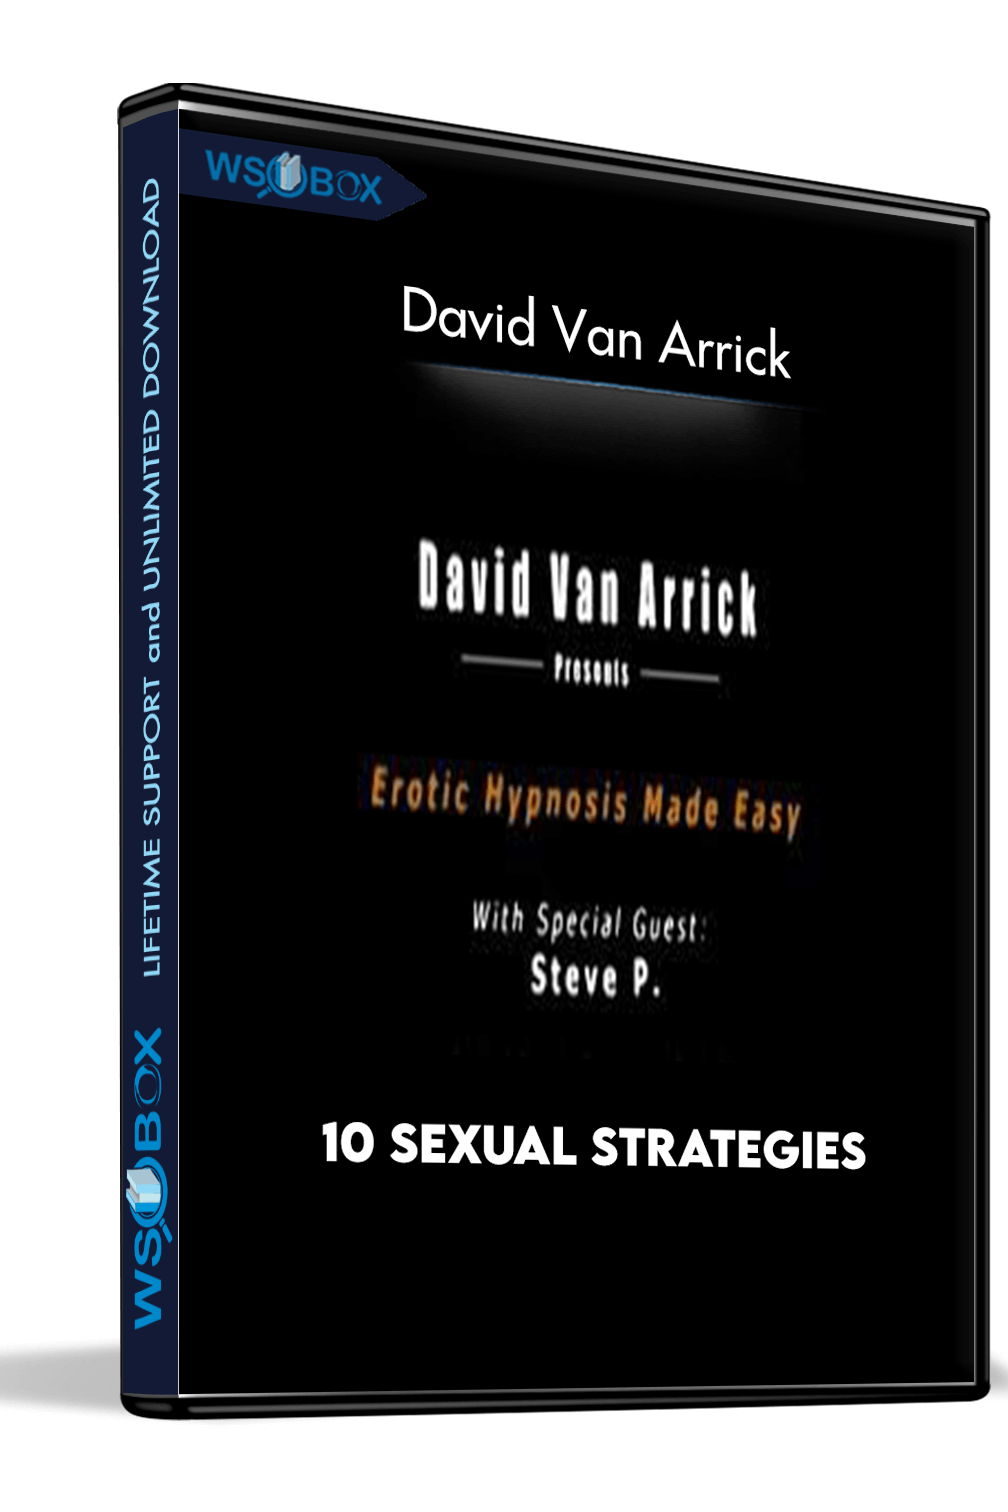 10-sexual-strategies-david-van-arrick